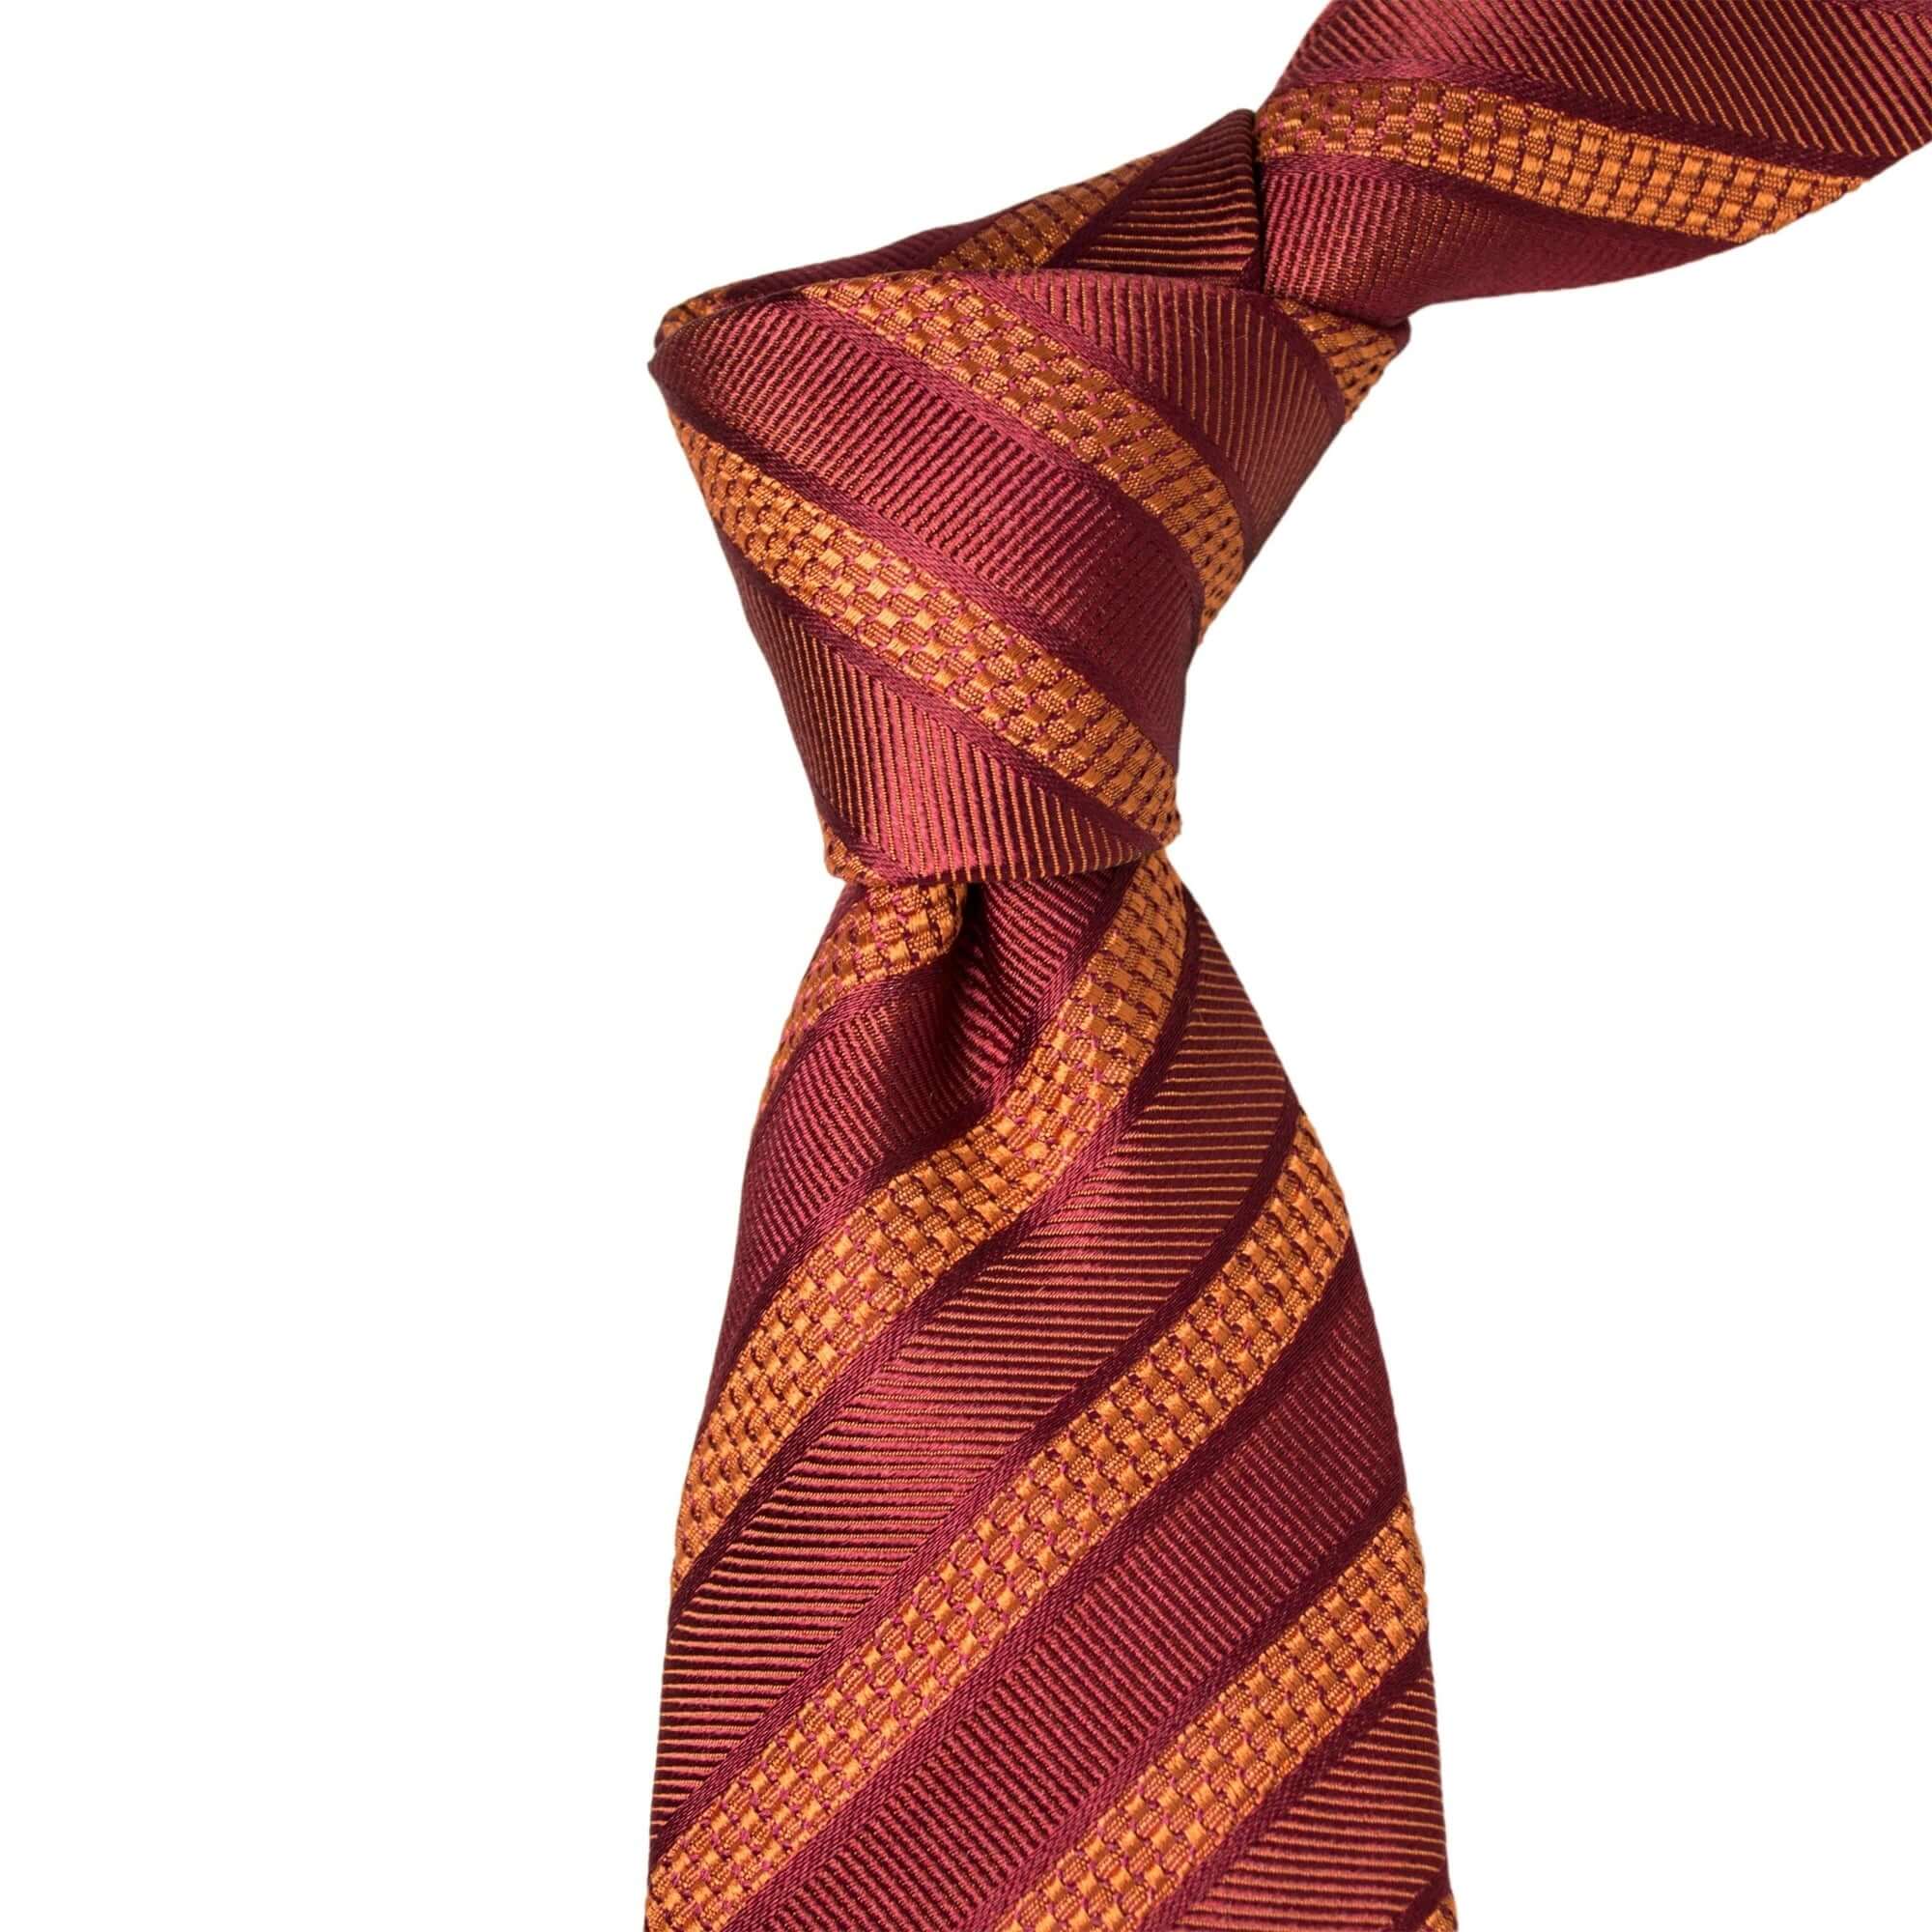 8cm Woven Orange Red Striped Necktie-Cufflinks.com.sg | Neckties.com.sg